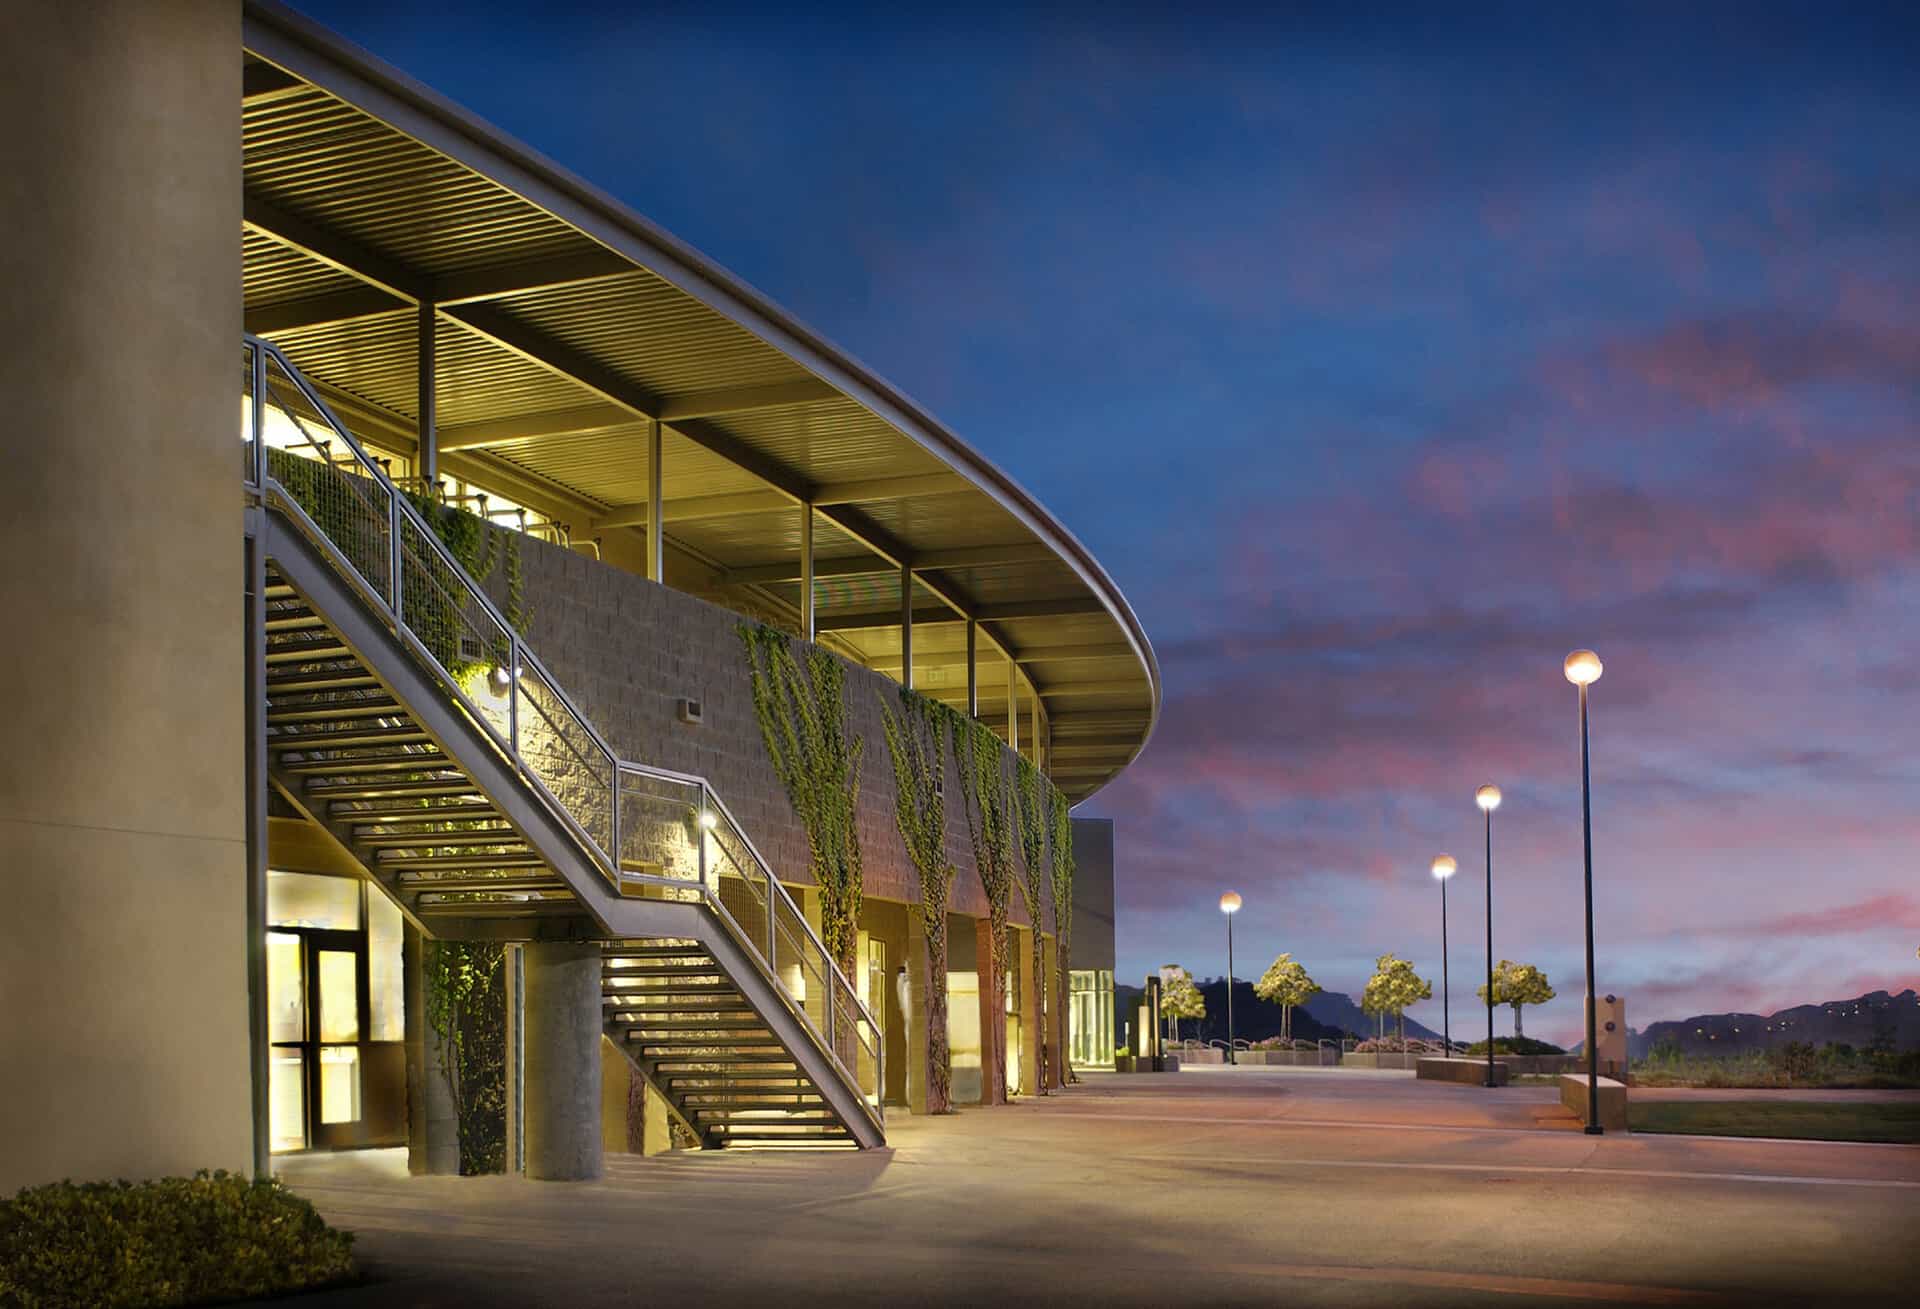 The San Diego Jewish Academy campus at dusk